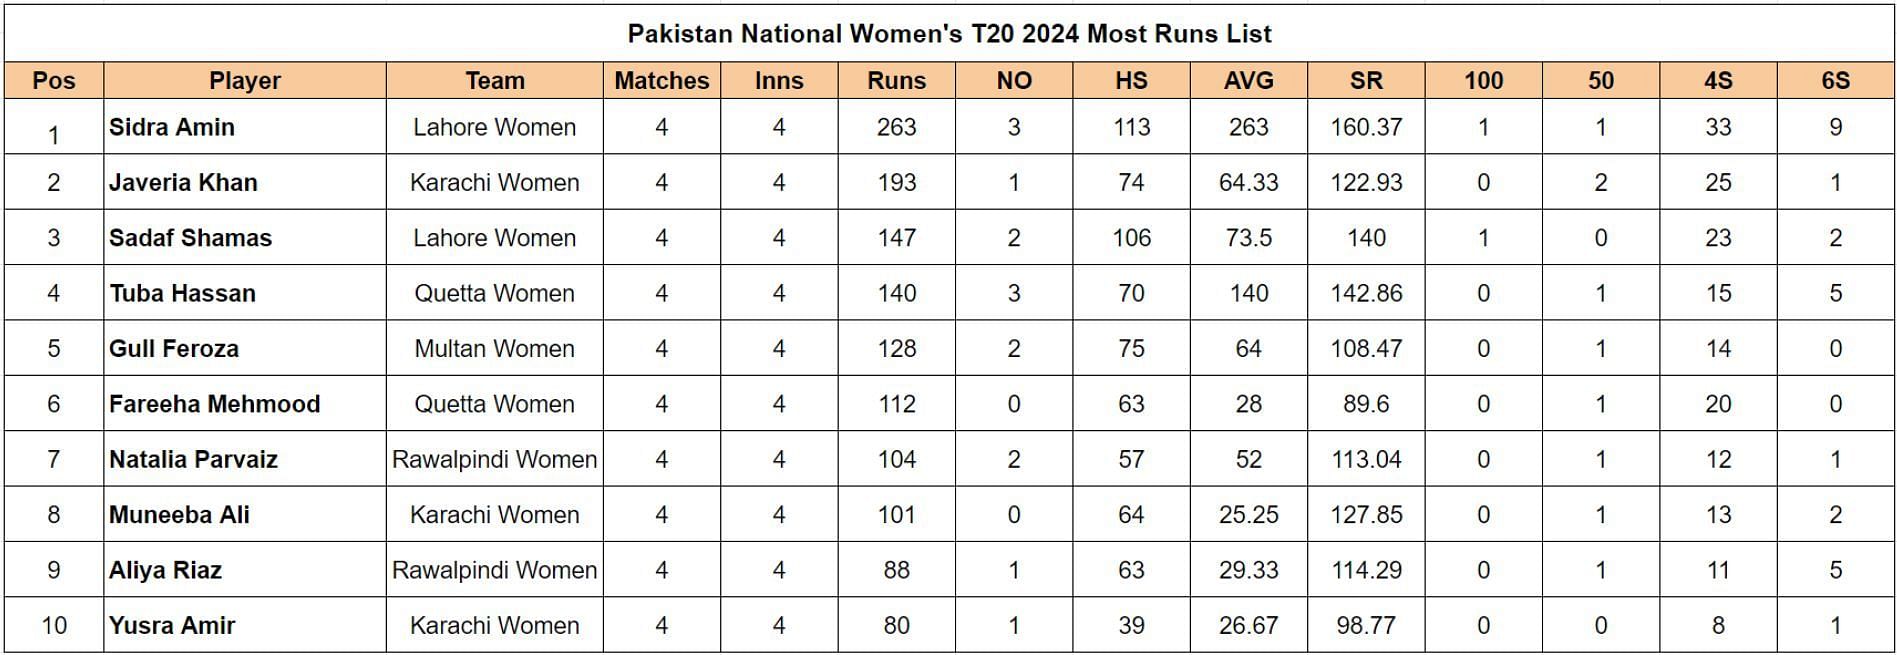 Pakistan National Women